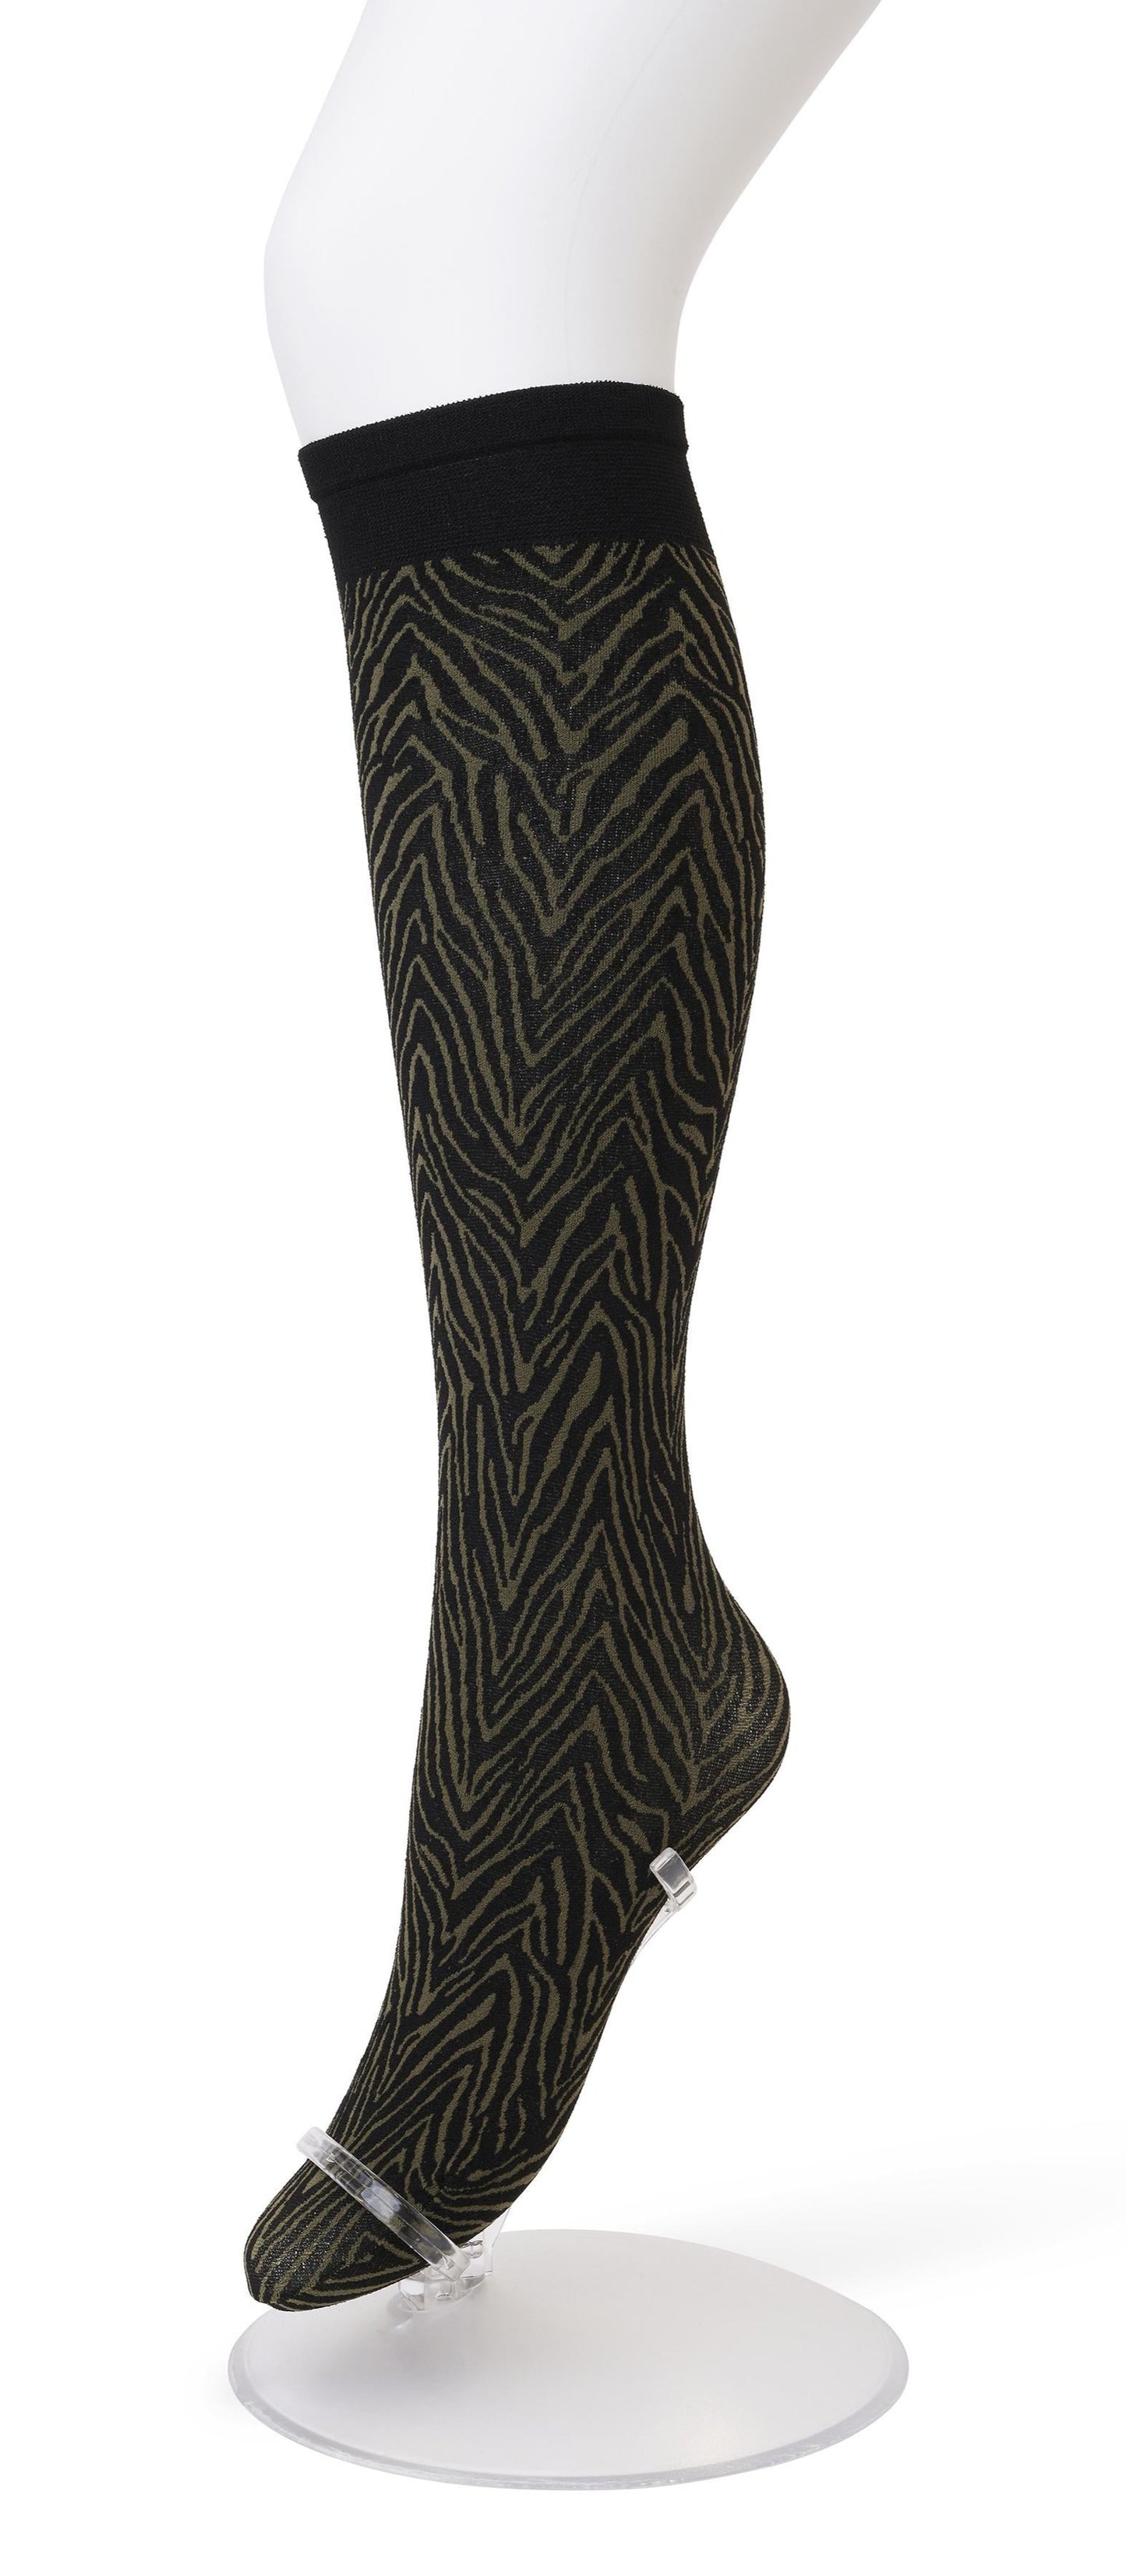 Bonnie Doon BP211509 Minotauro Knee-highs - Black opaque fashion knee-high socks with a linear zebra style pattern in khaki green.